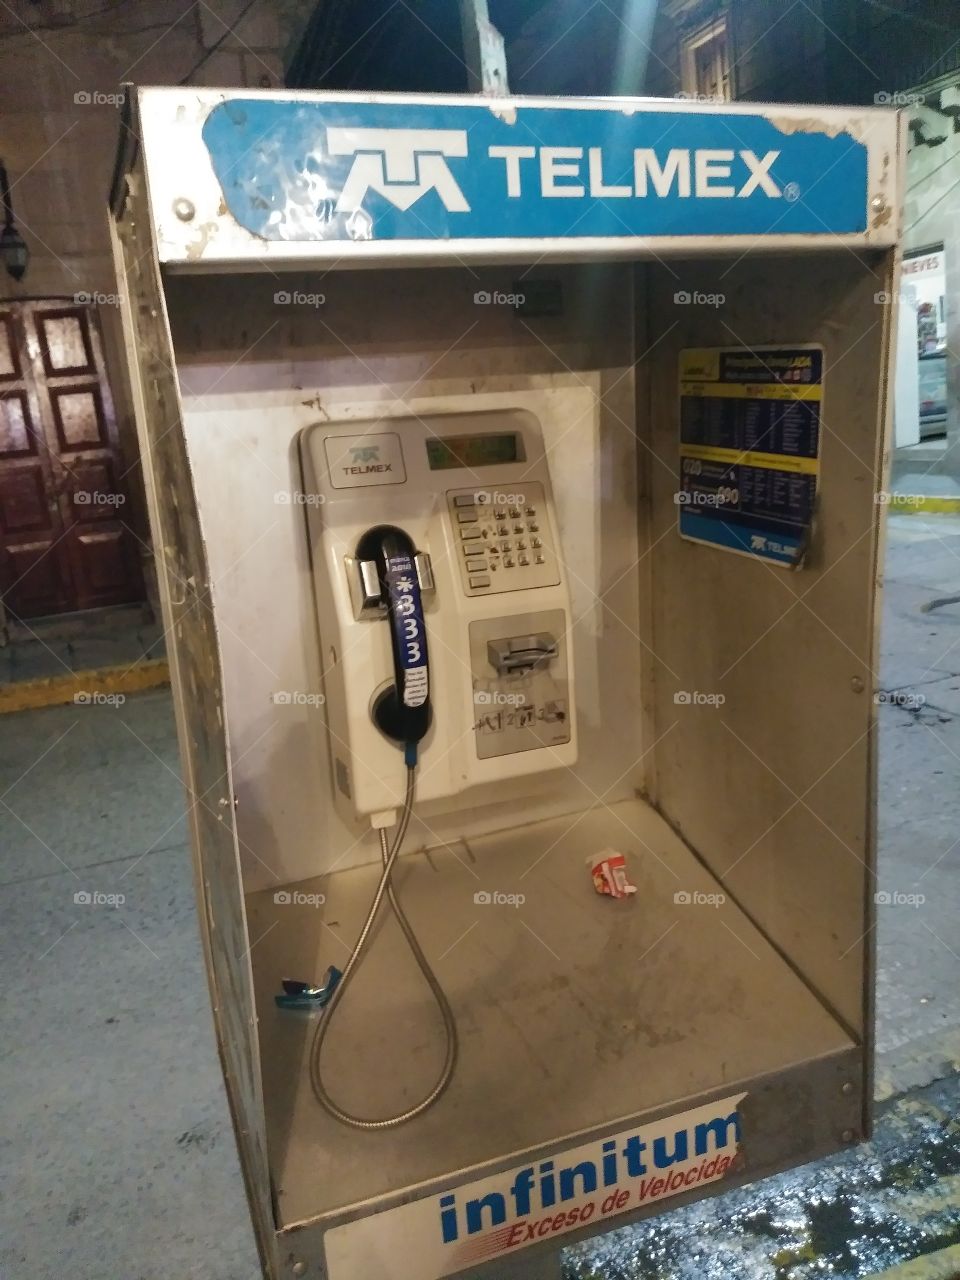 Phone Booths still exist in Jalisco, México.